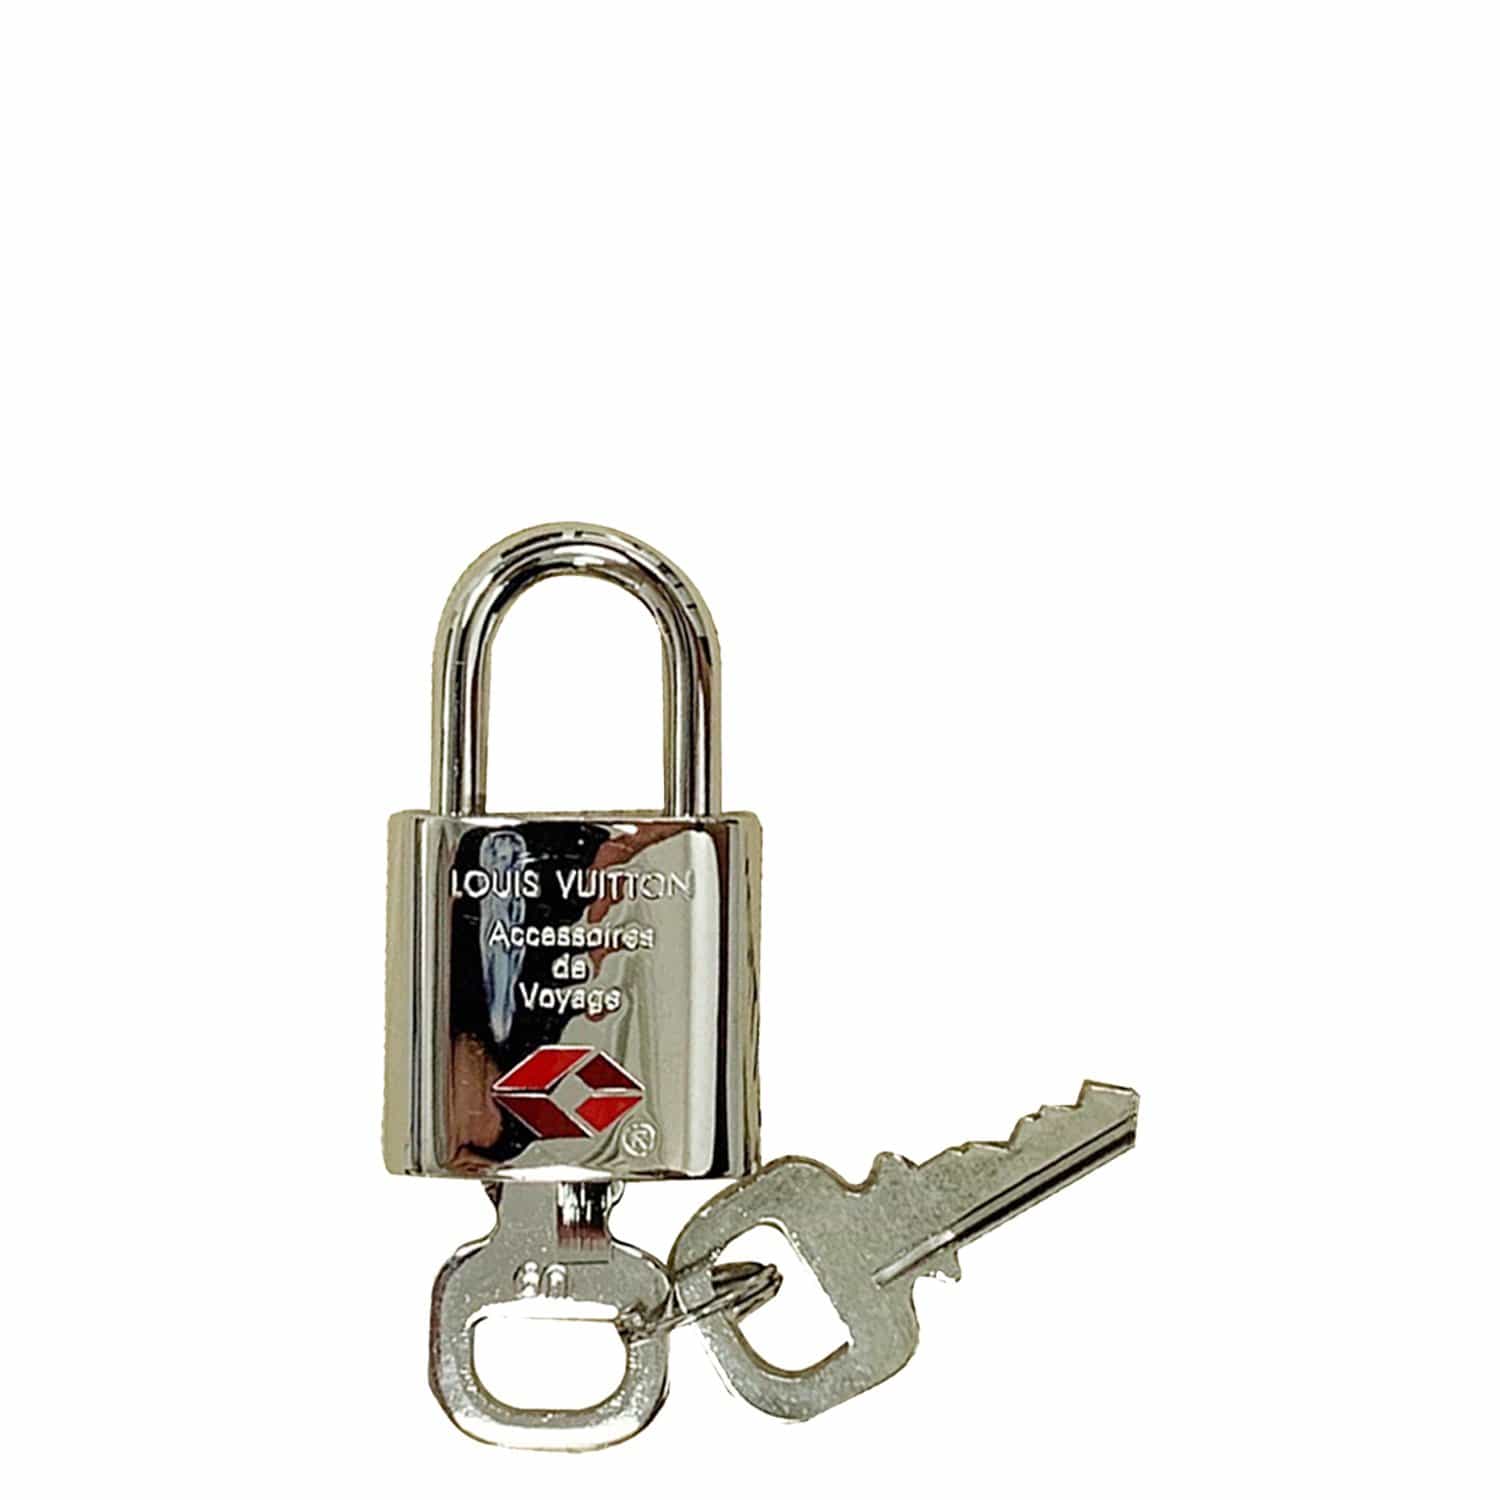 louis vuitton key lock